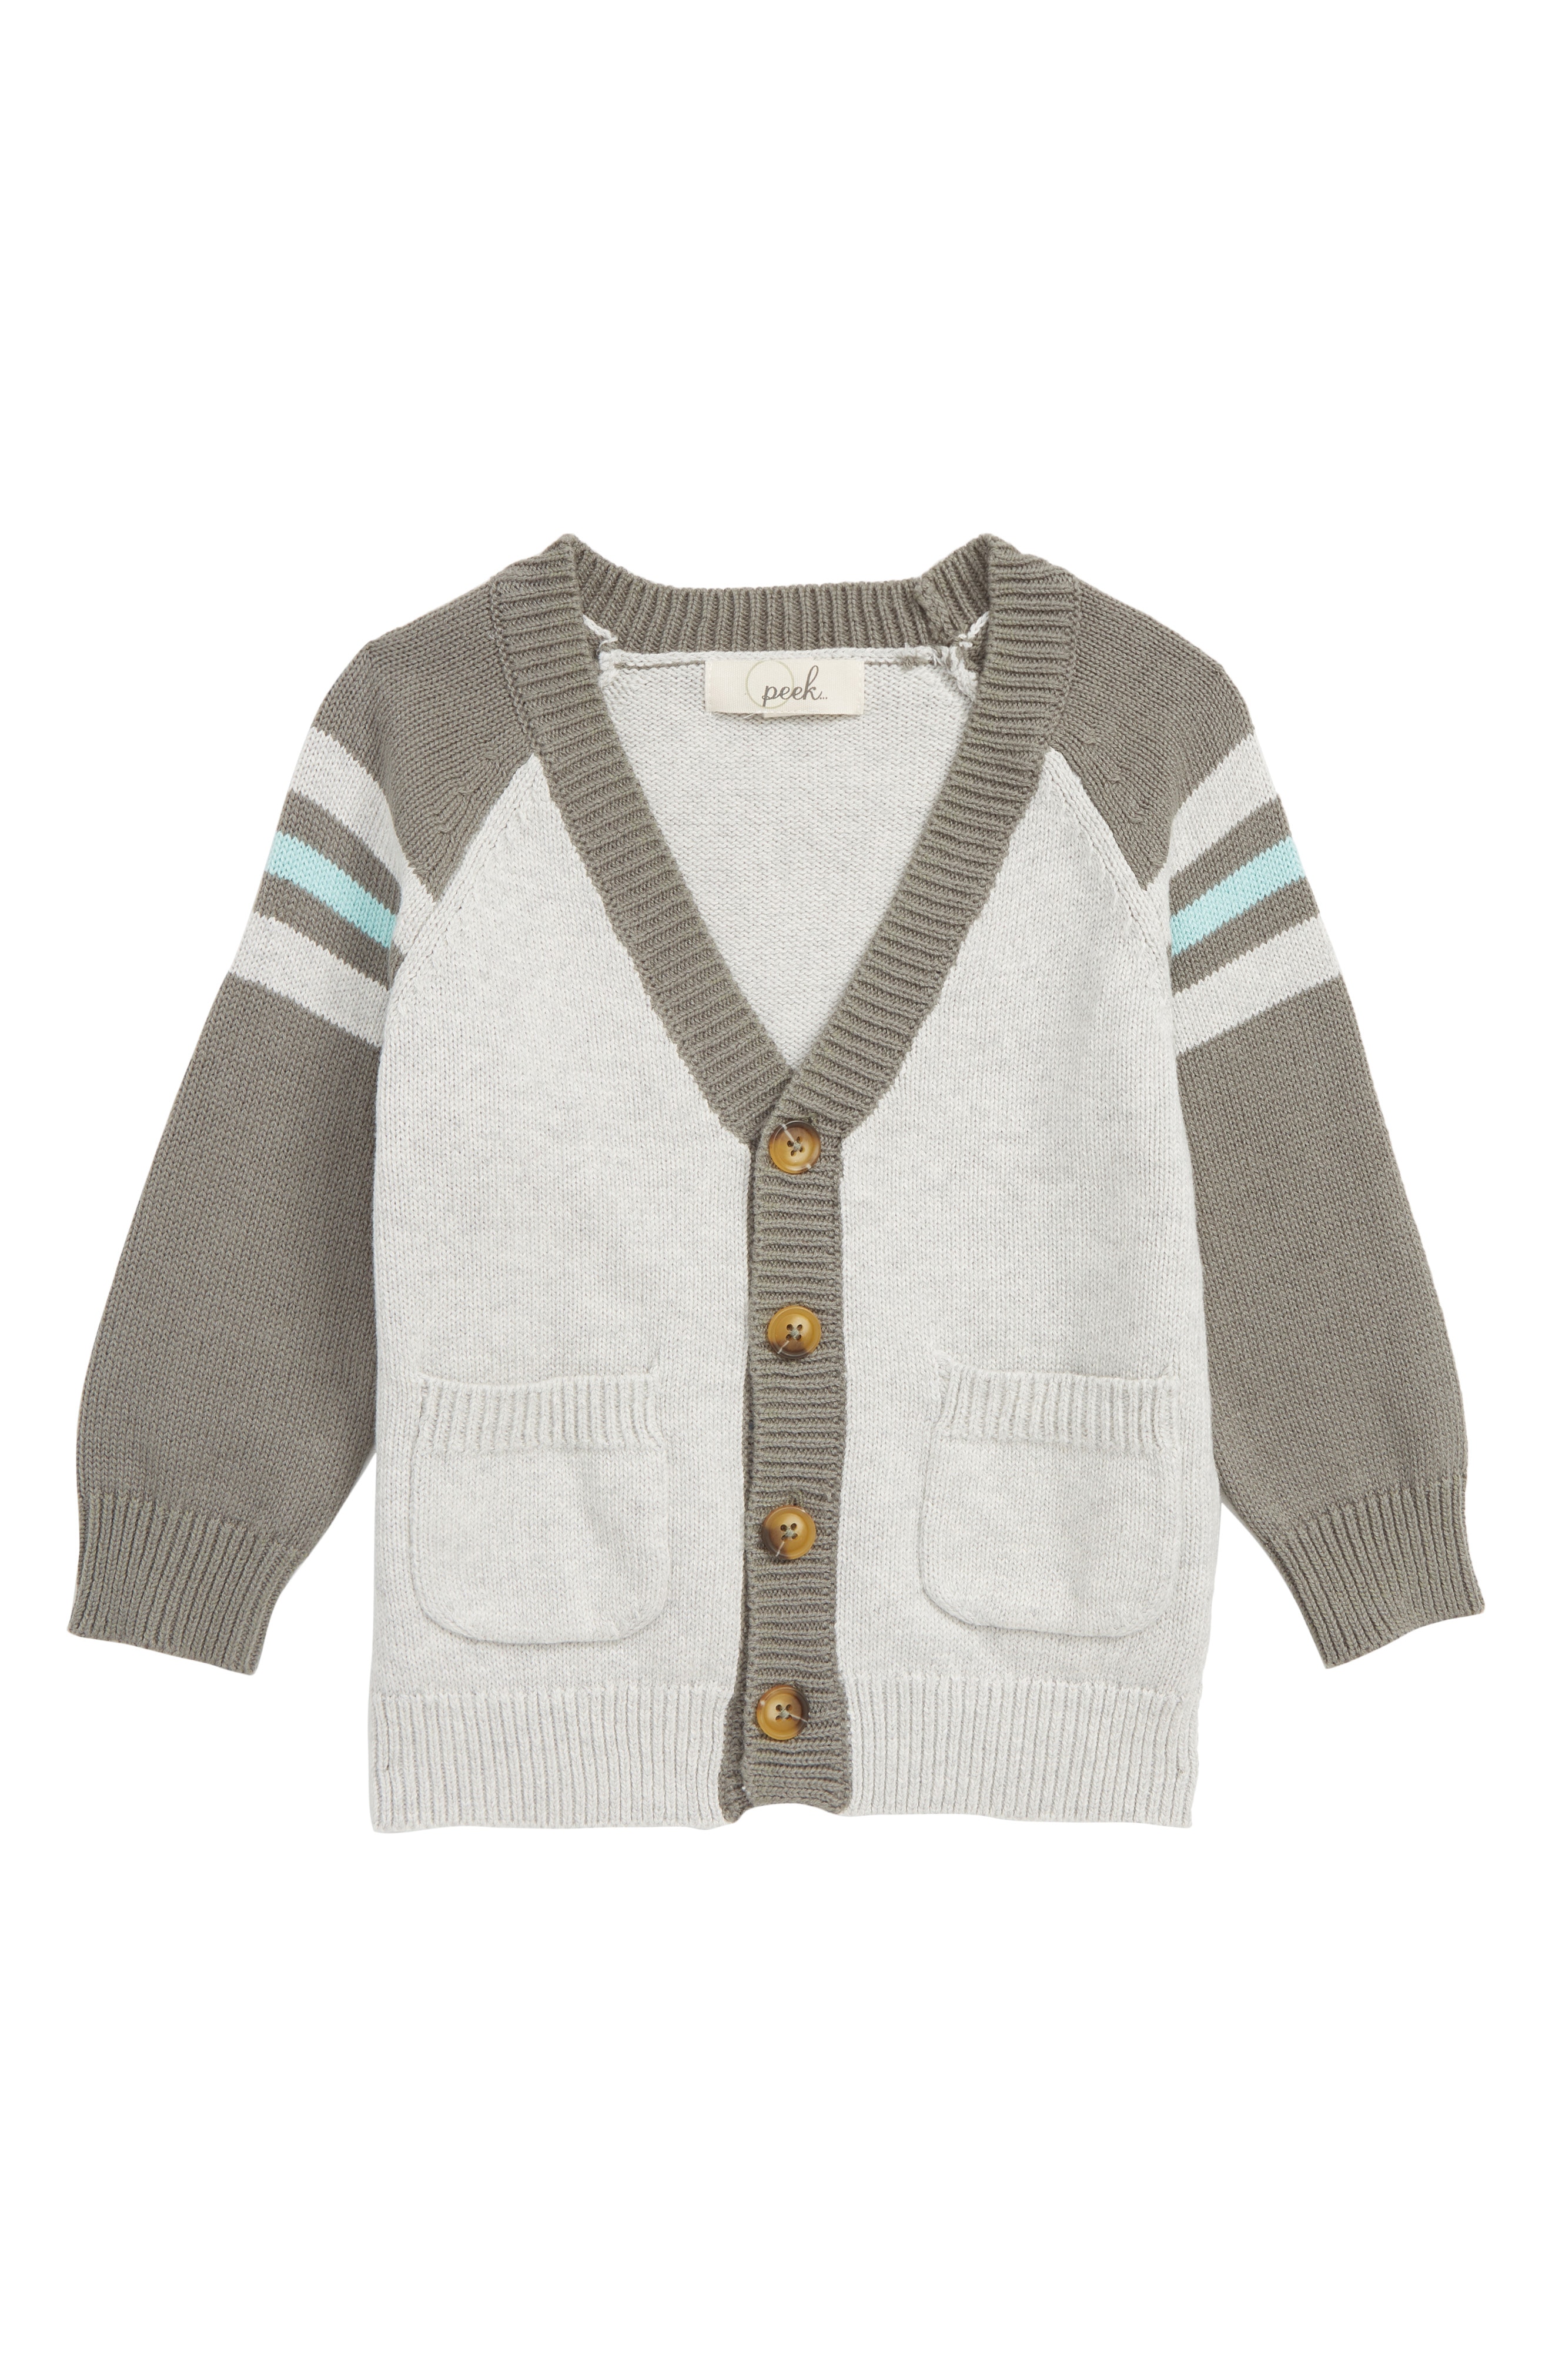 Boys' Sweaters Clothing: Hoodies, Shirts, Pants & T-Shirts | Nordstrom